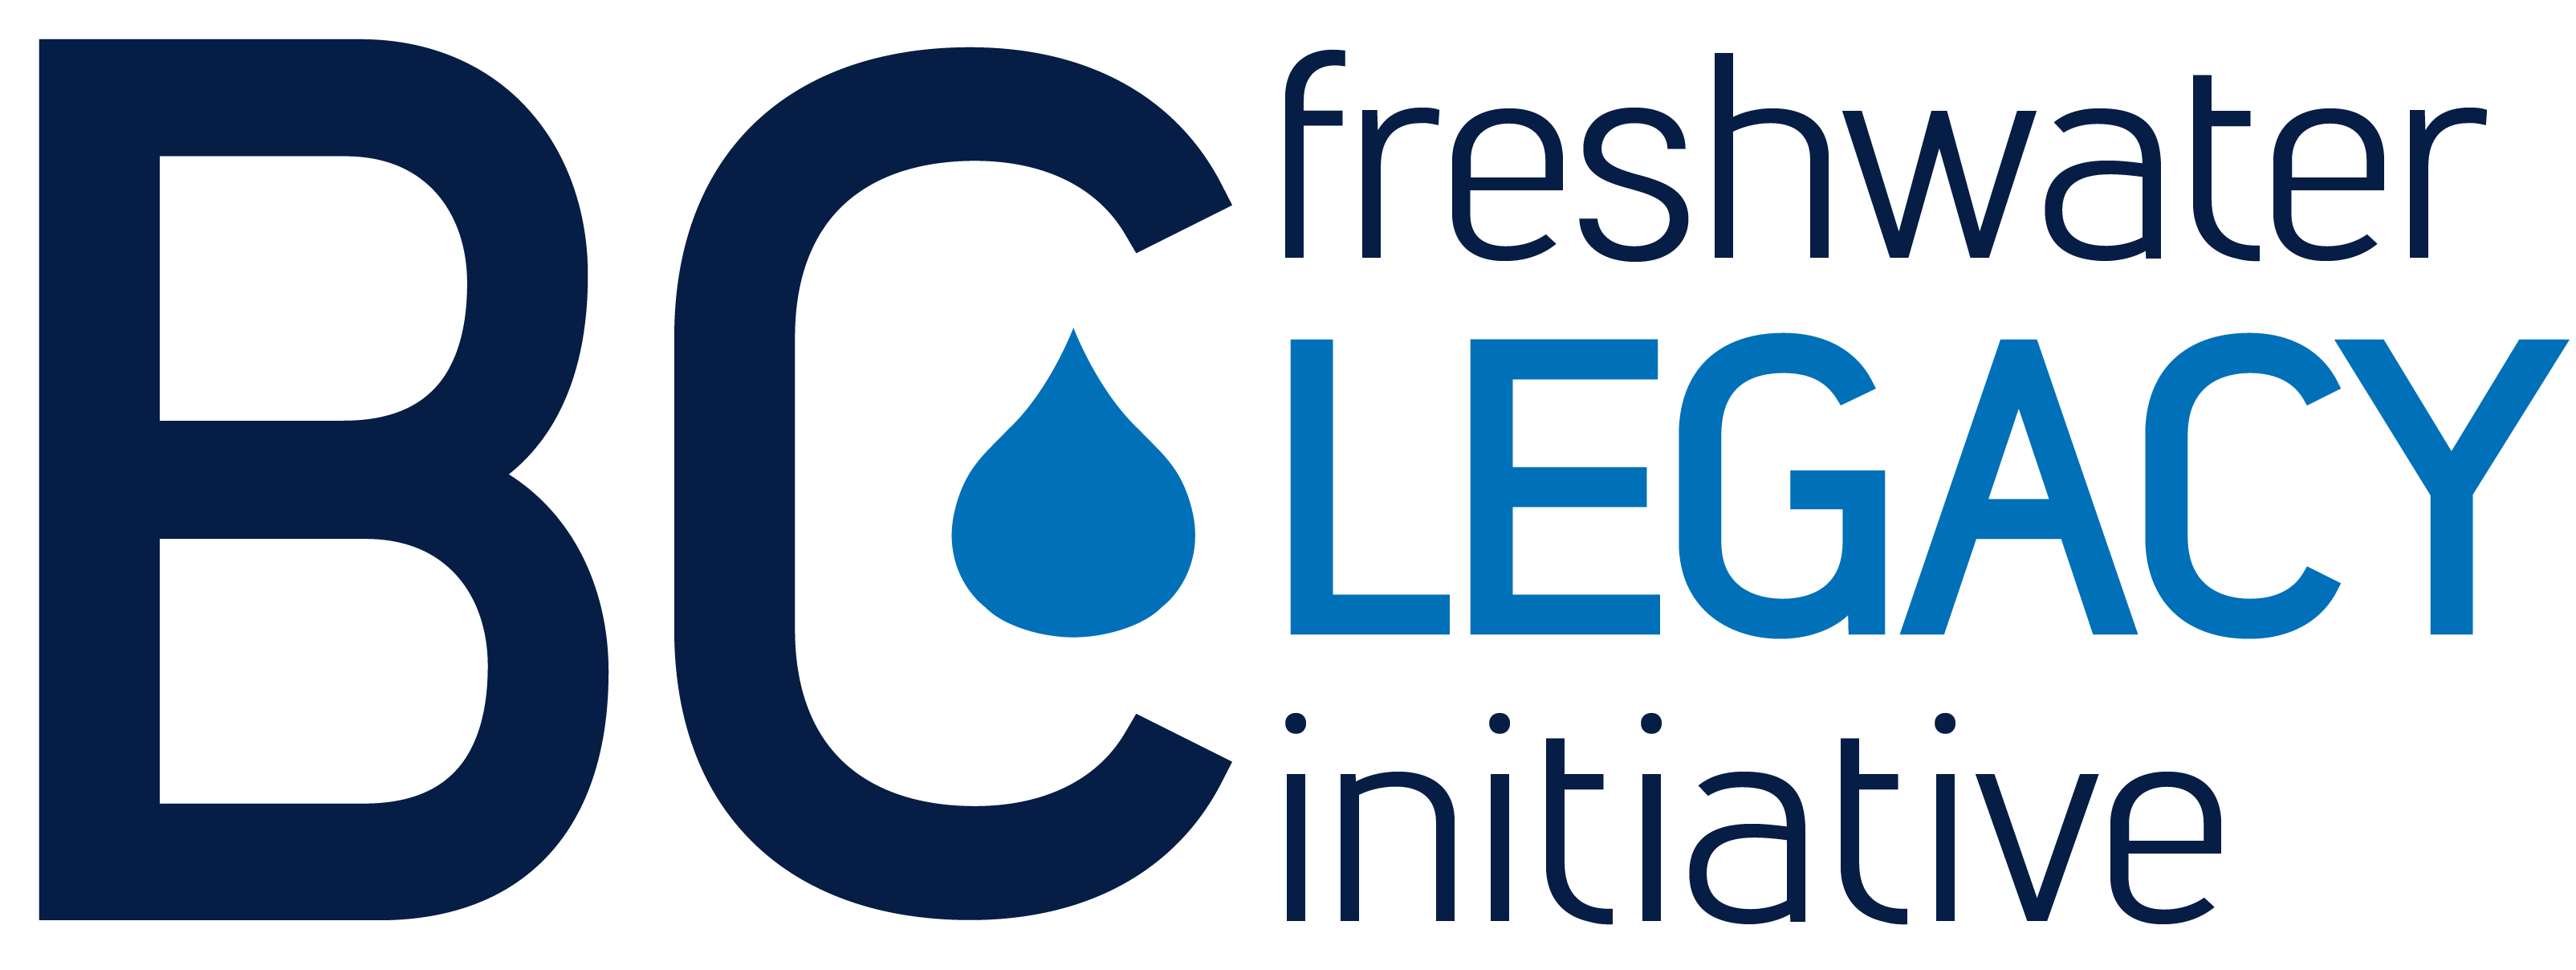 BC Freshwater Legacy Initiative logo